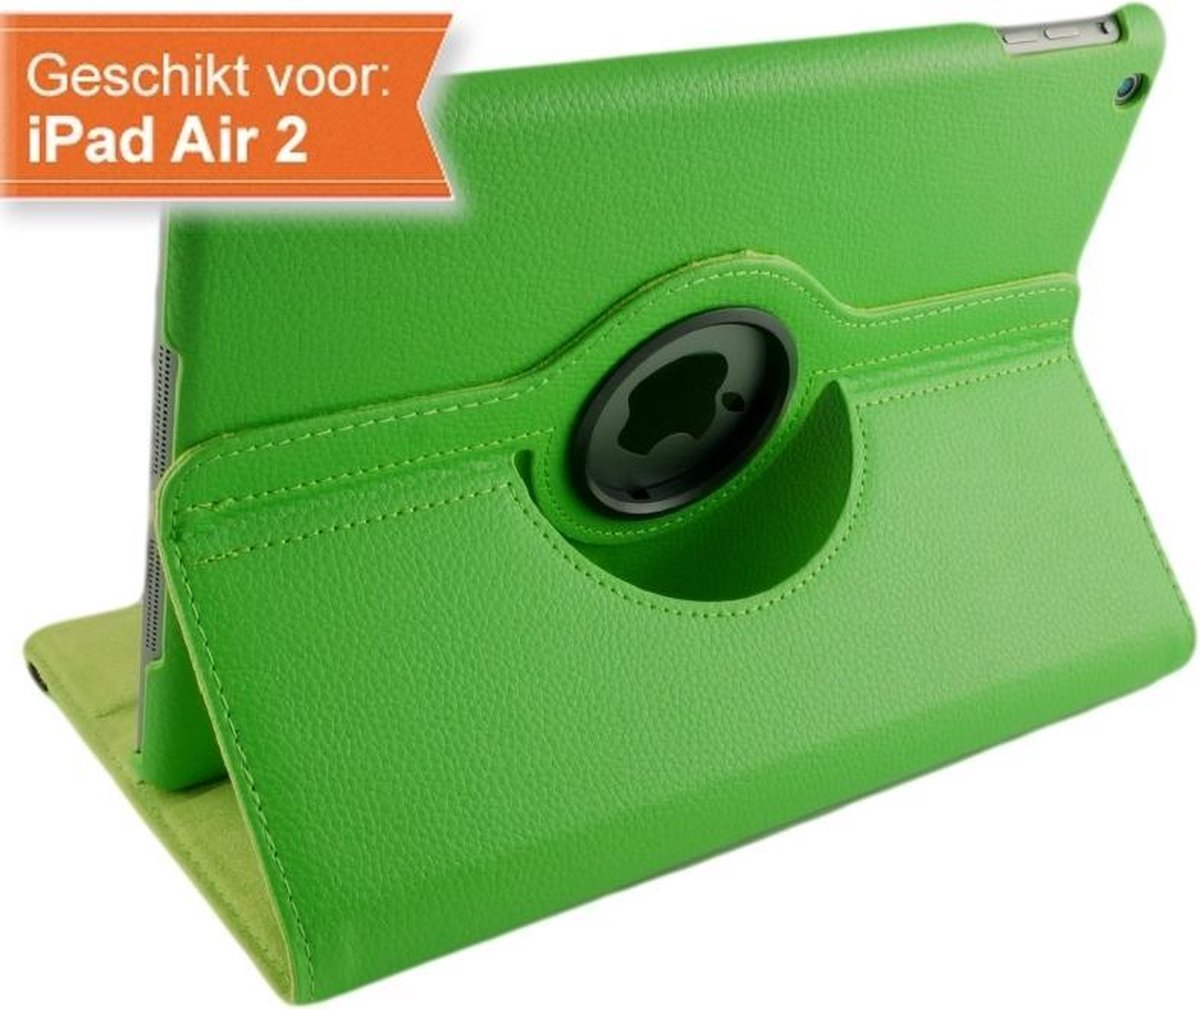 iPad Air 2 Hoes - Groen - 360° Draaibaar + Styluspennen - GIC